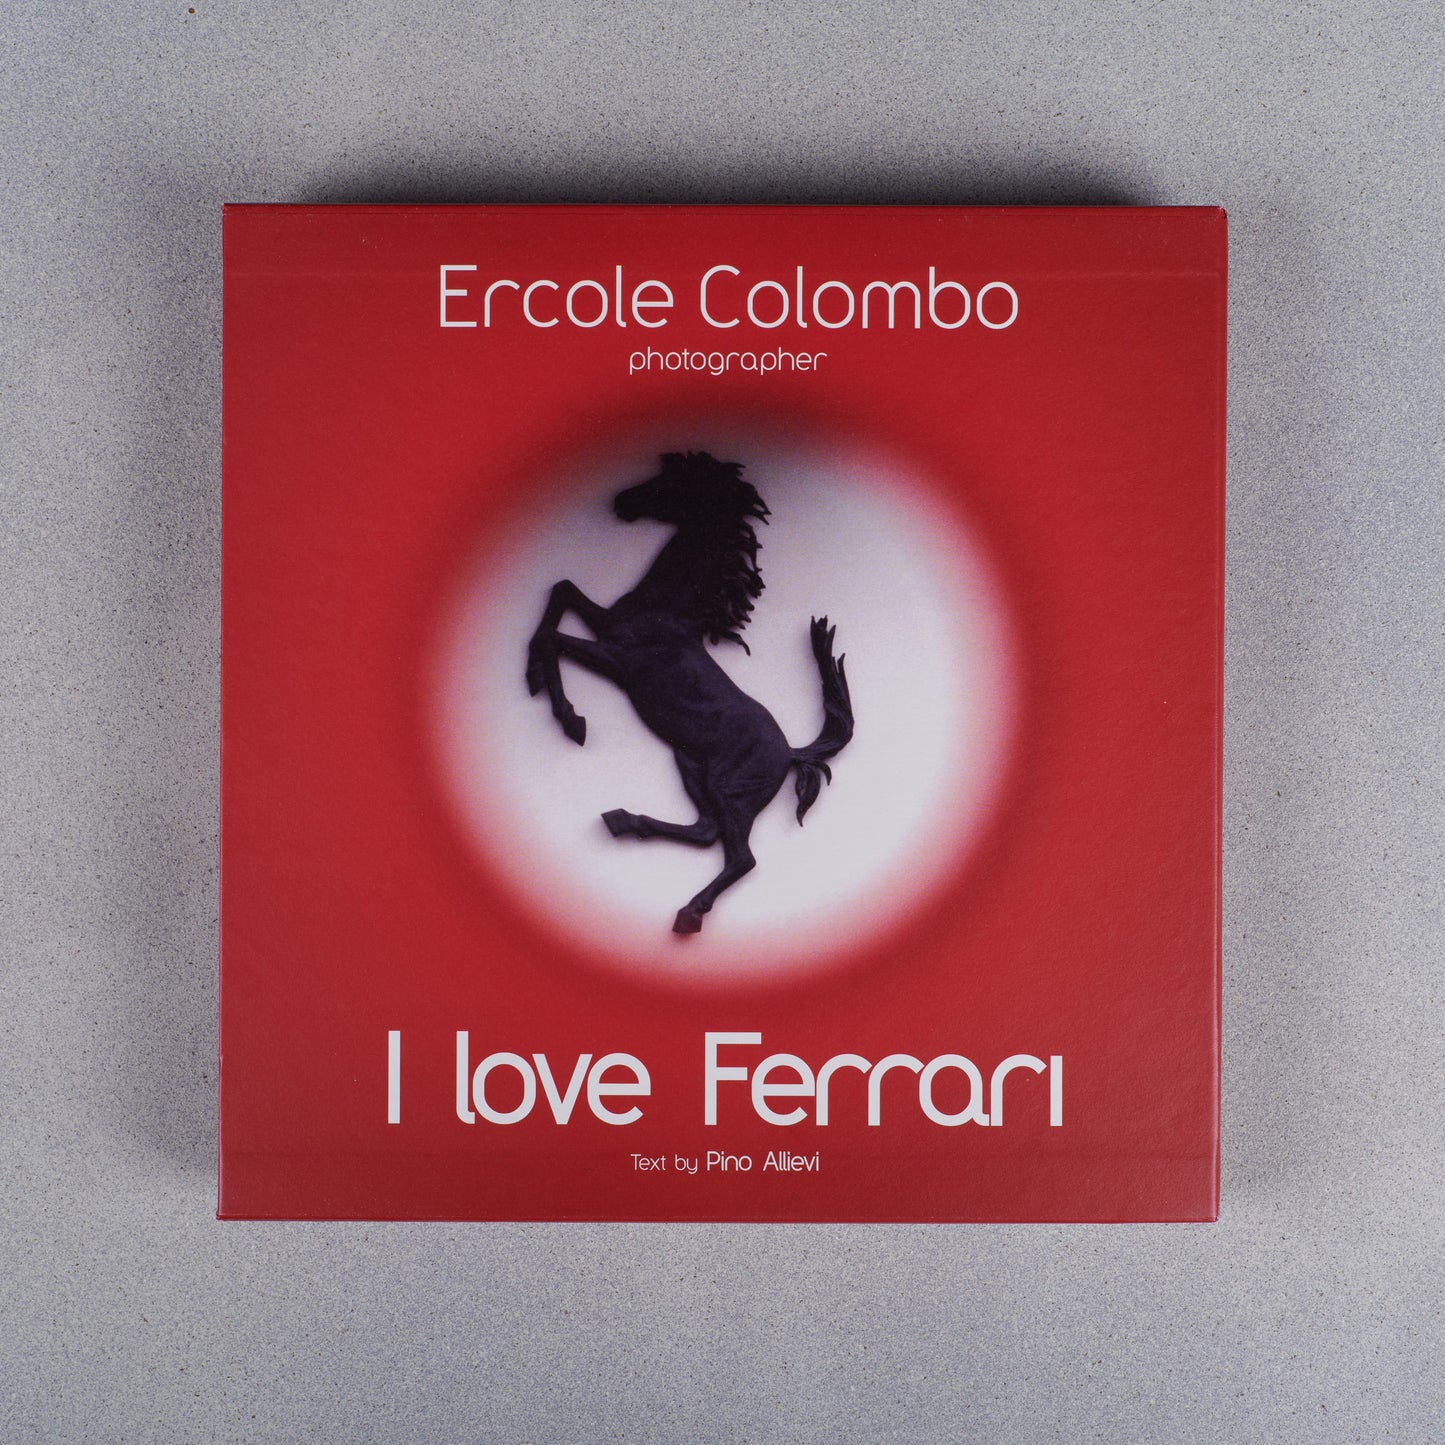 I Love Ferrari - Ercole Colombo